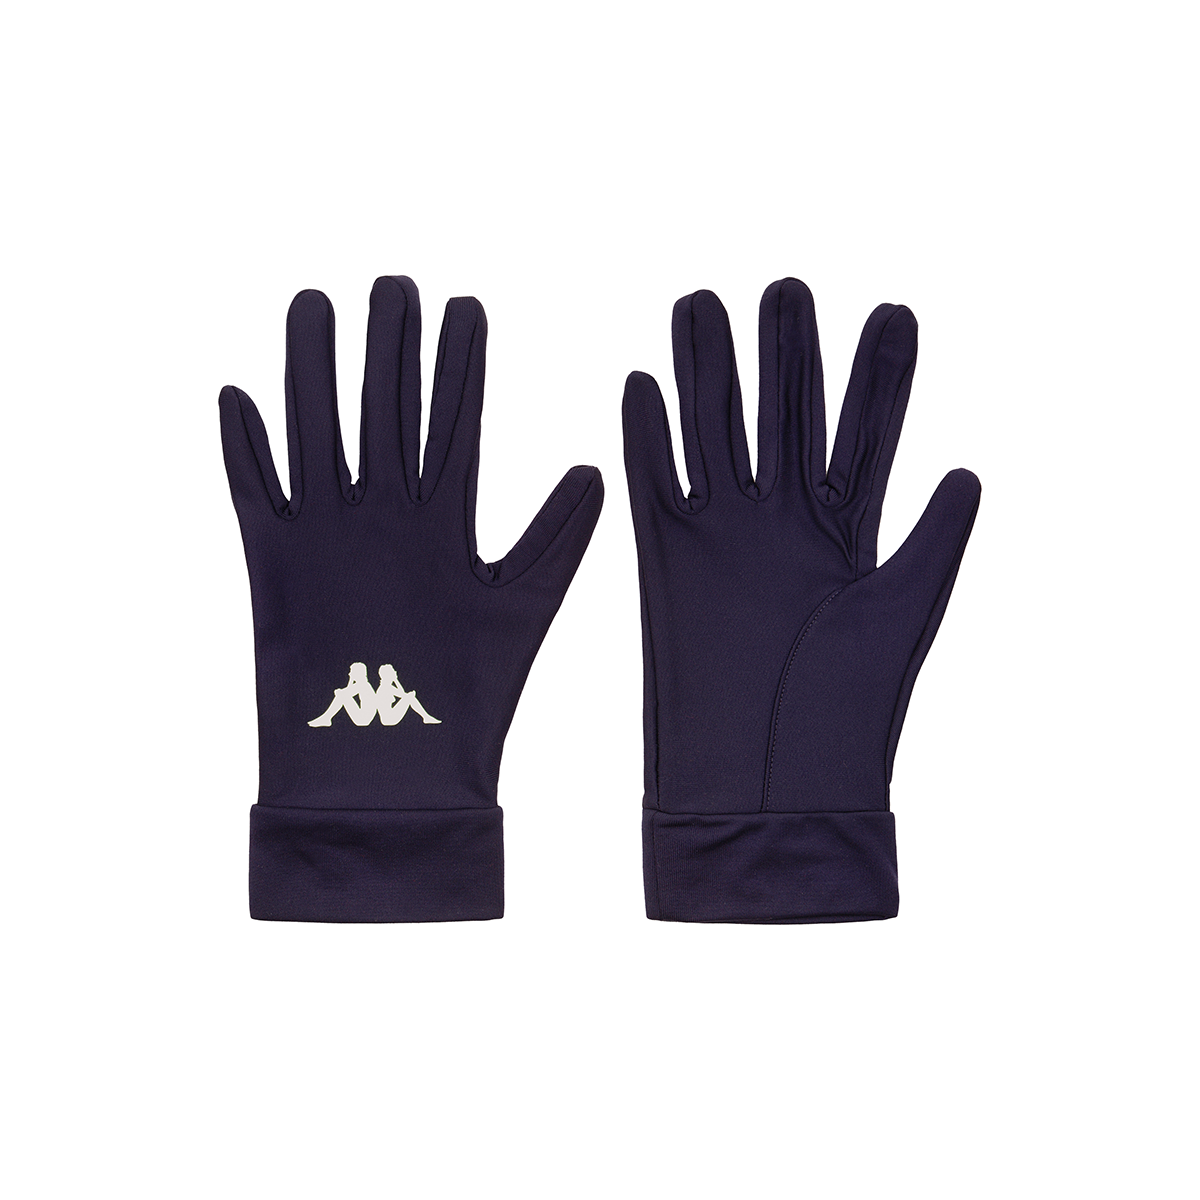 AVES 3 Grip Glove